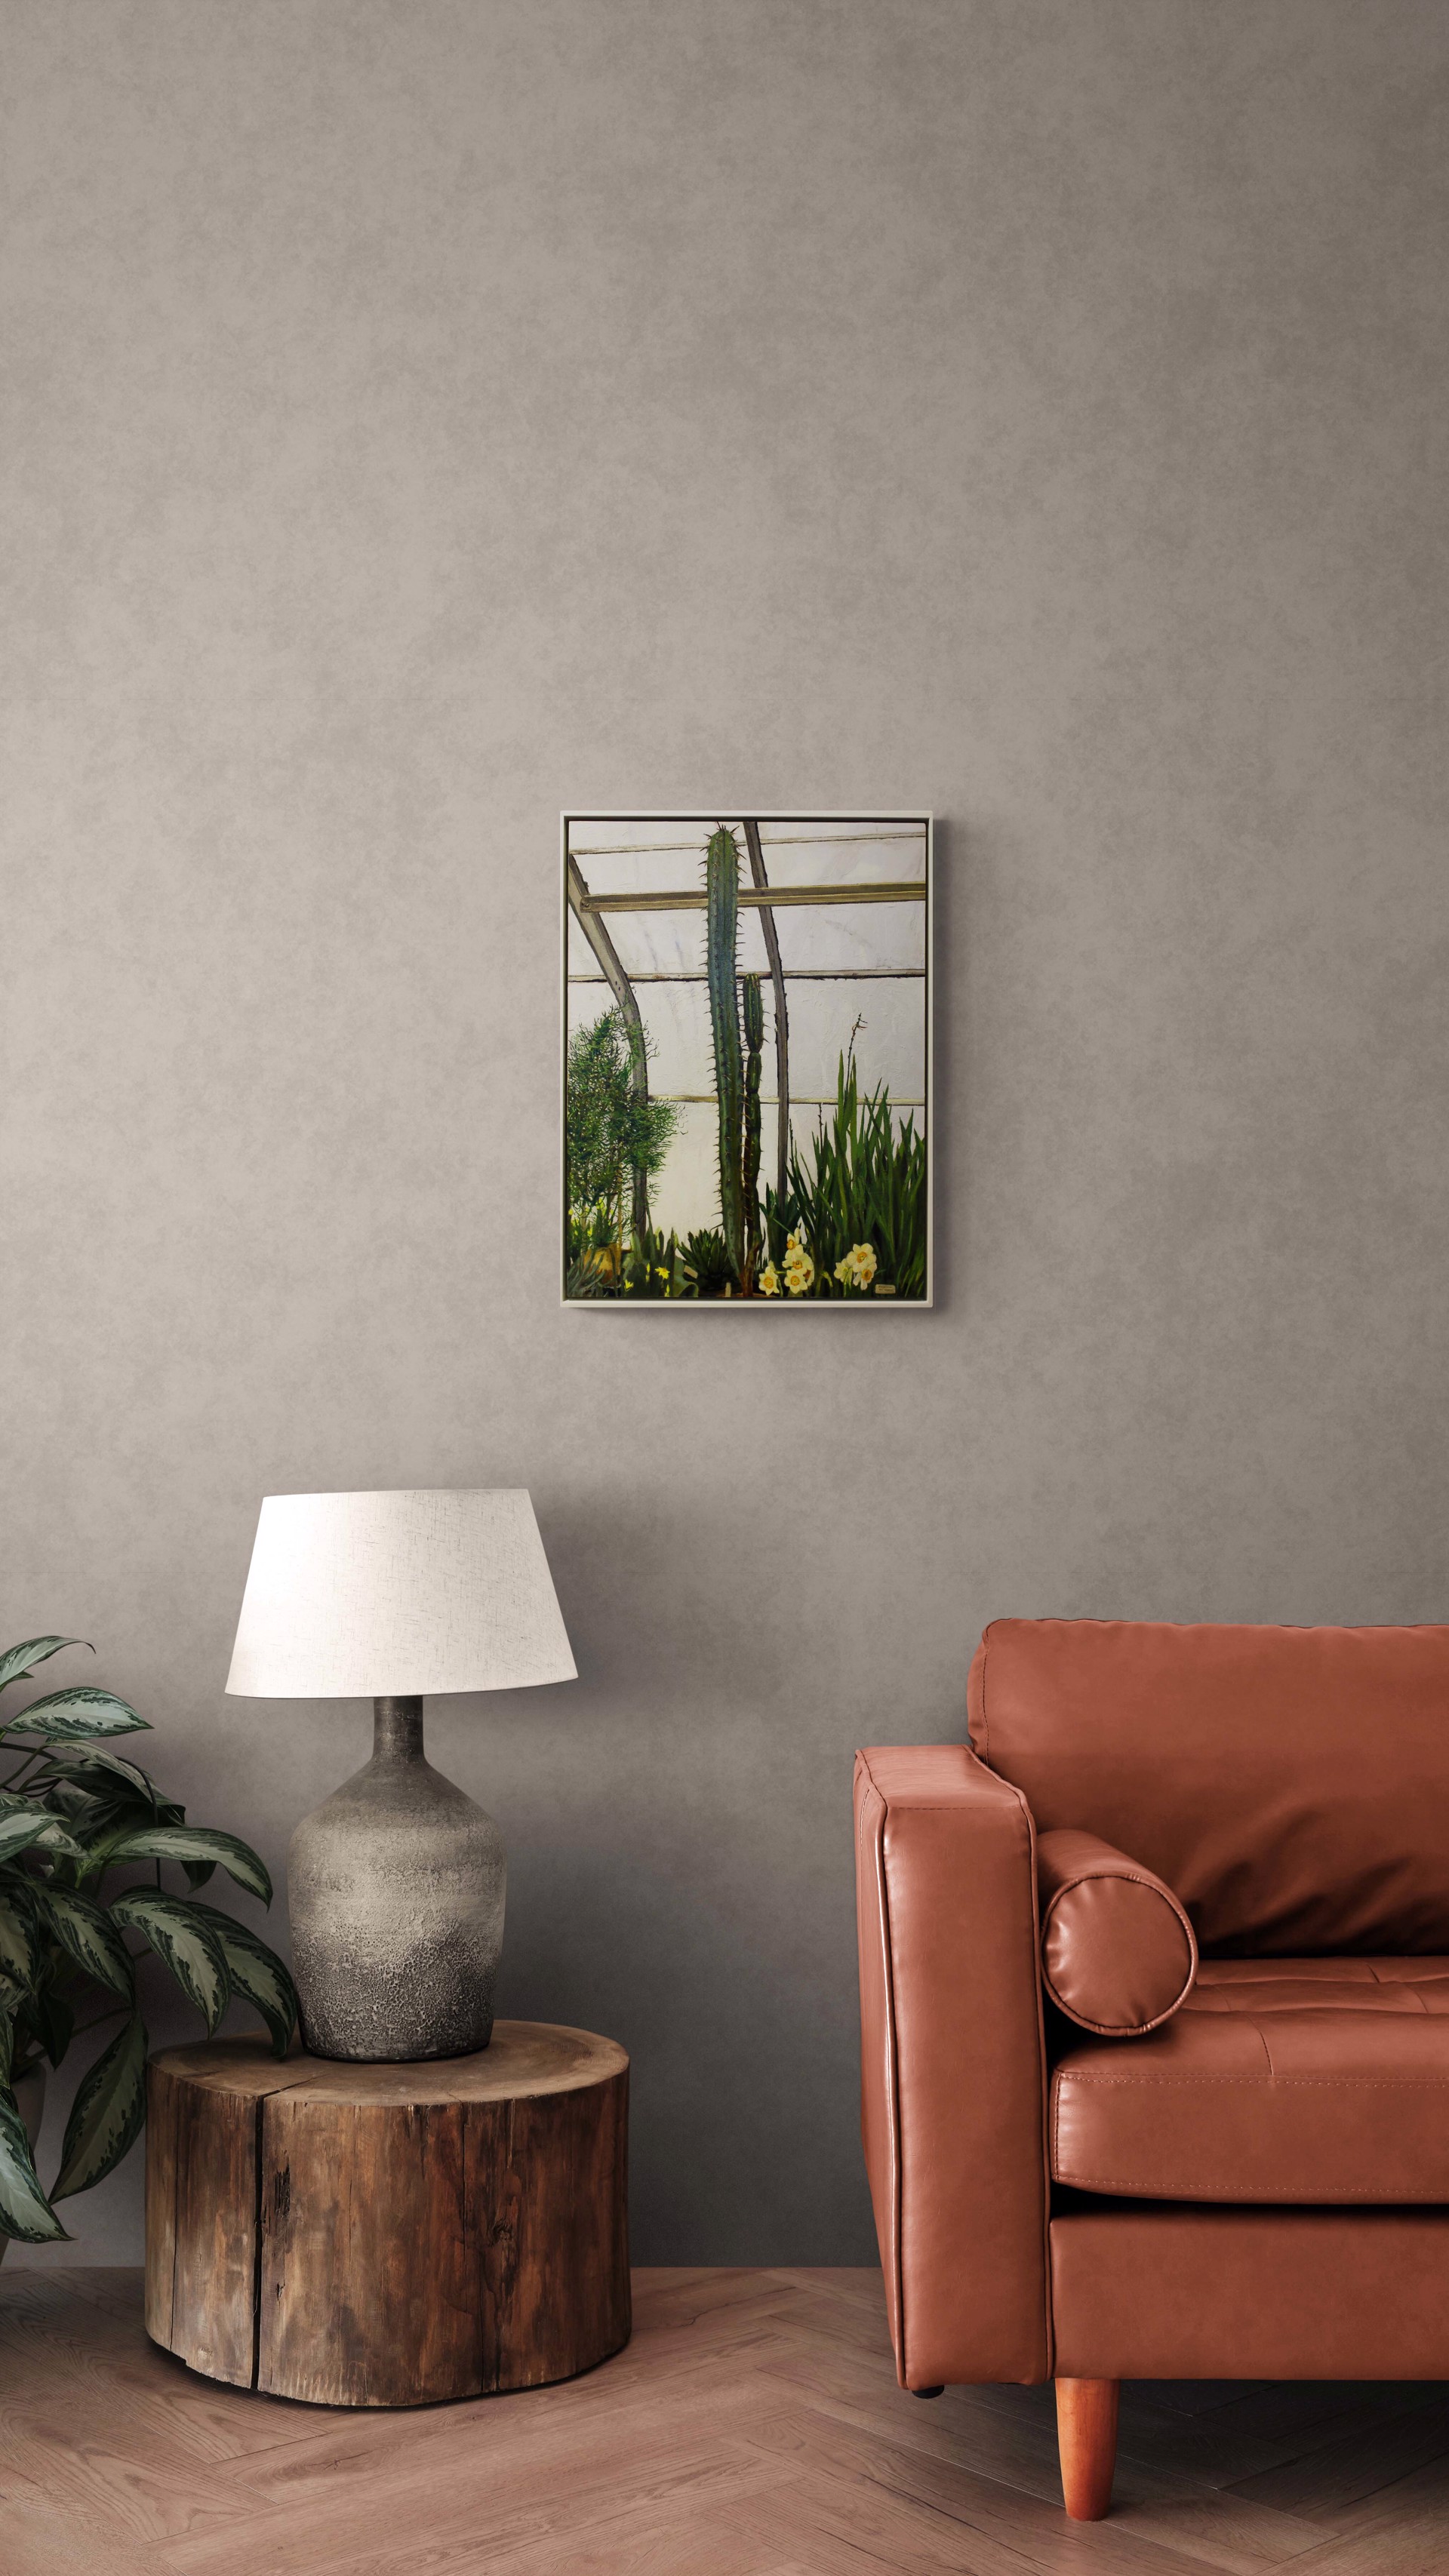 Greenhouse Cactus by John Gordon Gauld